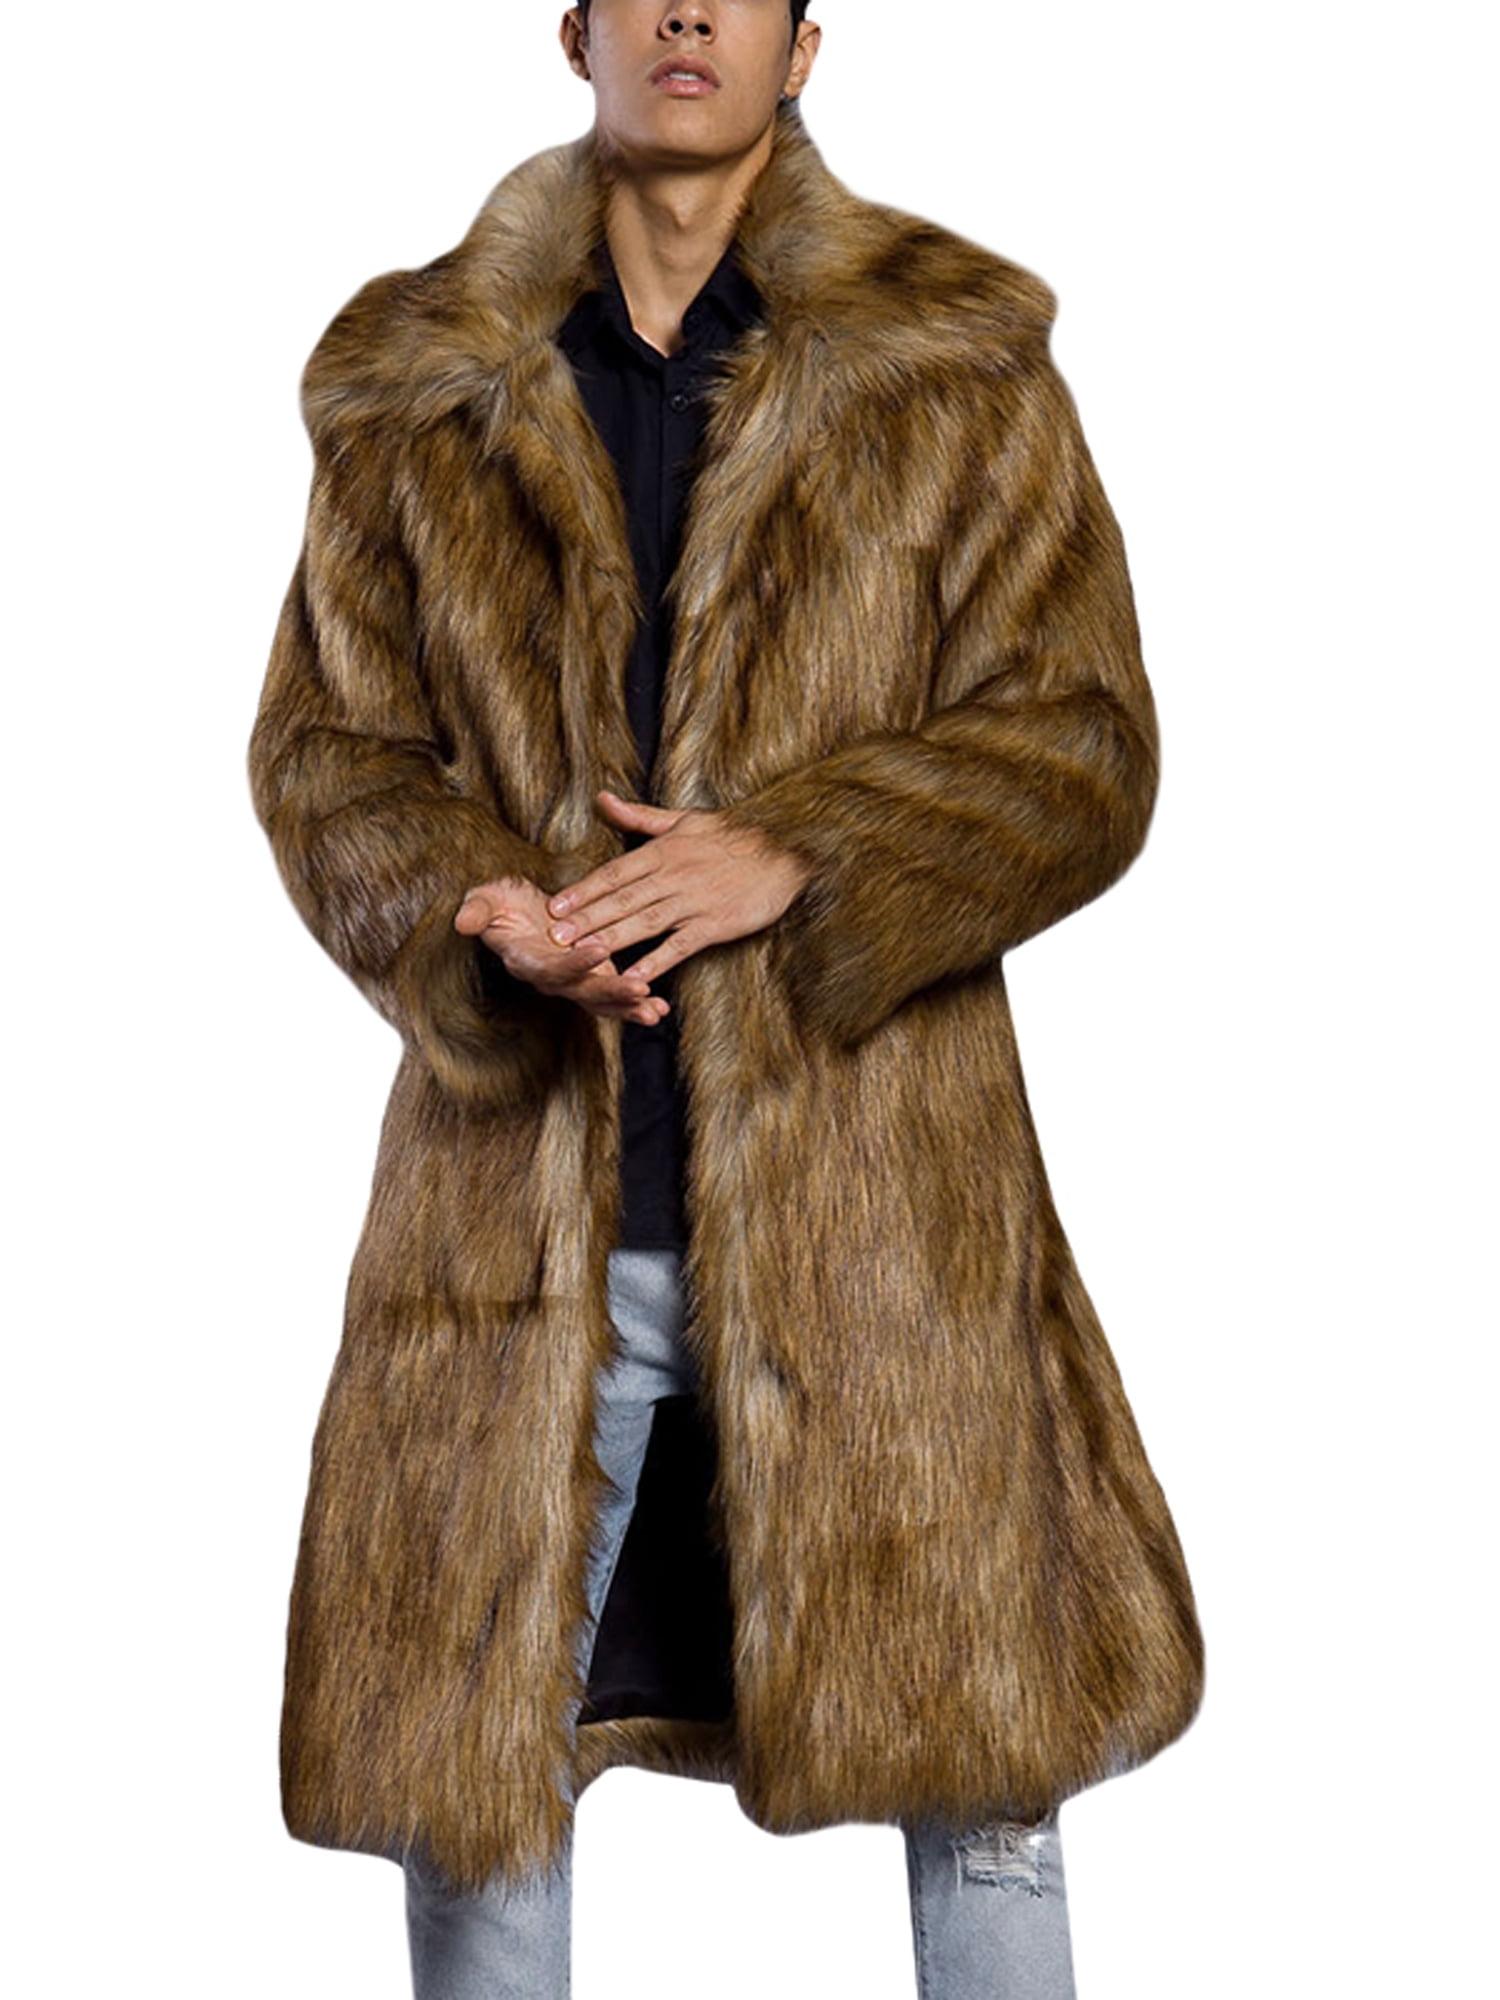 Lallc - Men's Faux Fur Winter Warm Thicken Long Jacket Trench Coat